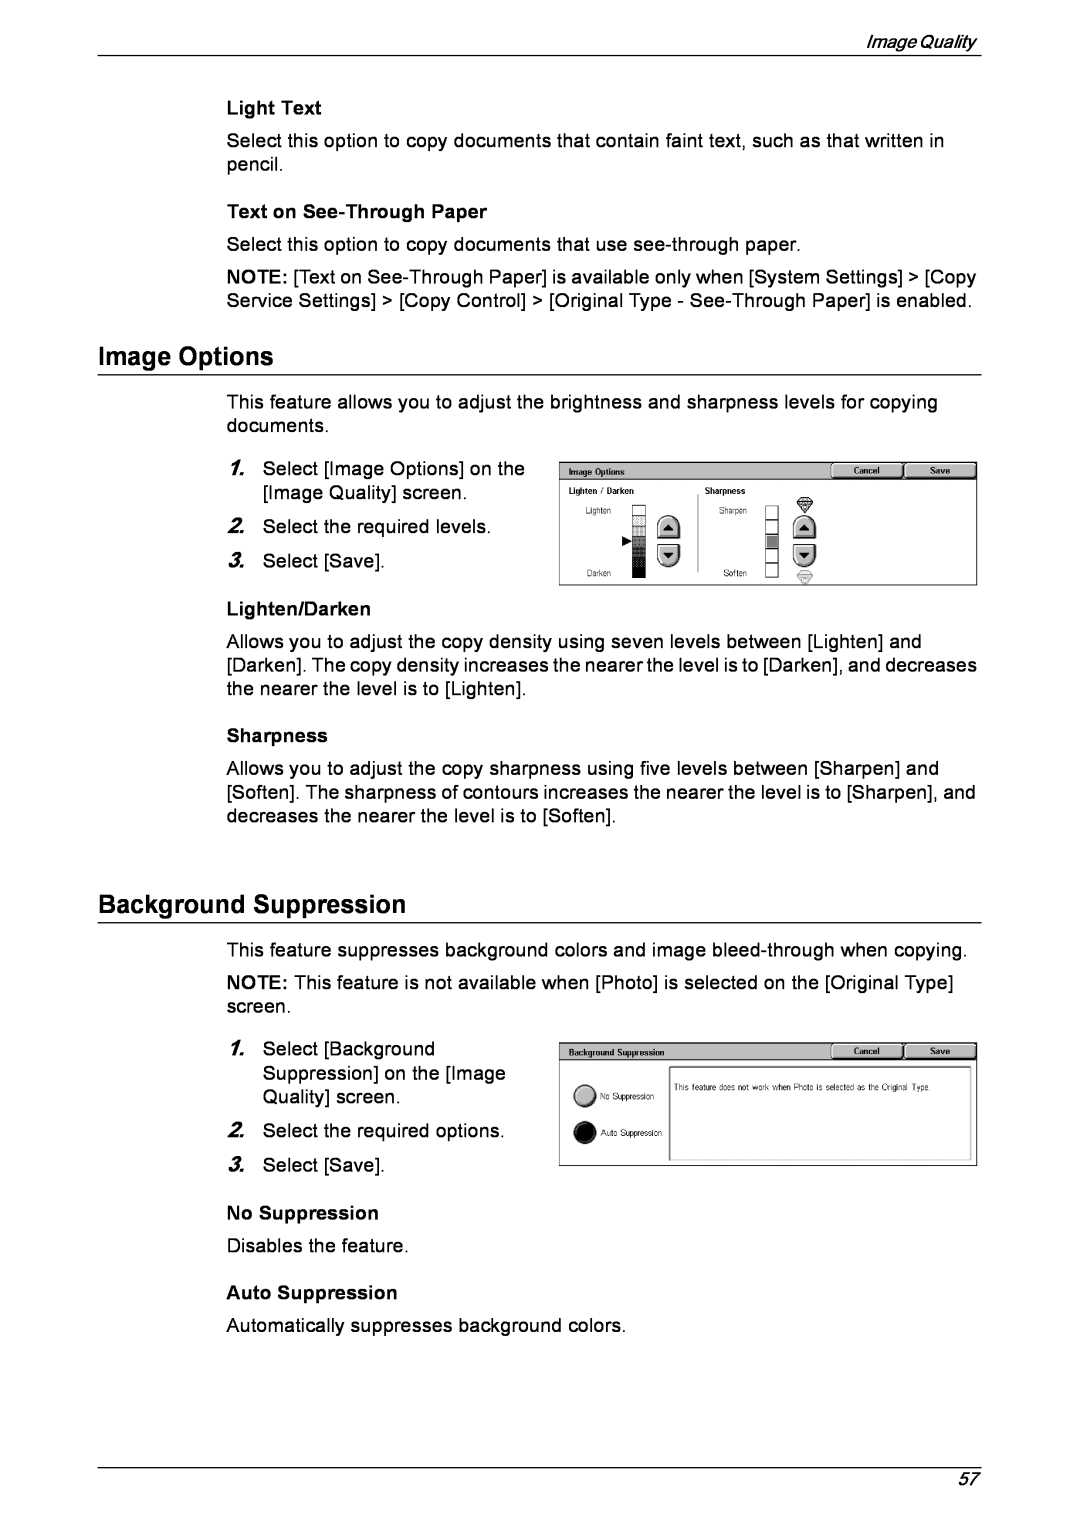 Xerox 5230 manual Image Options, Background Suppression, Light Text, Text on See-ThroughPaper, Lighten/Darken, Sharpness 